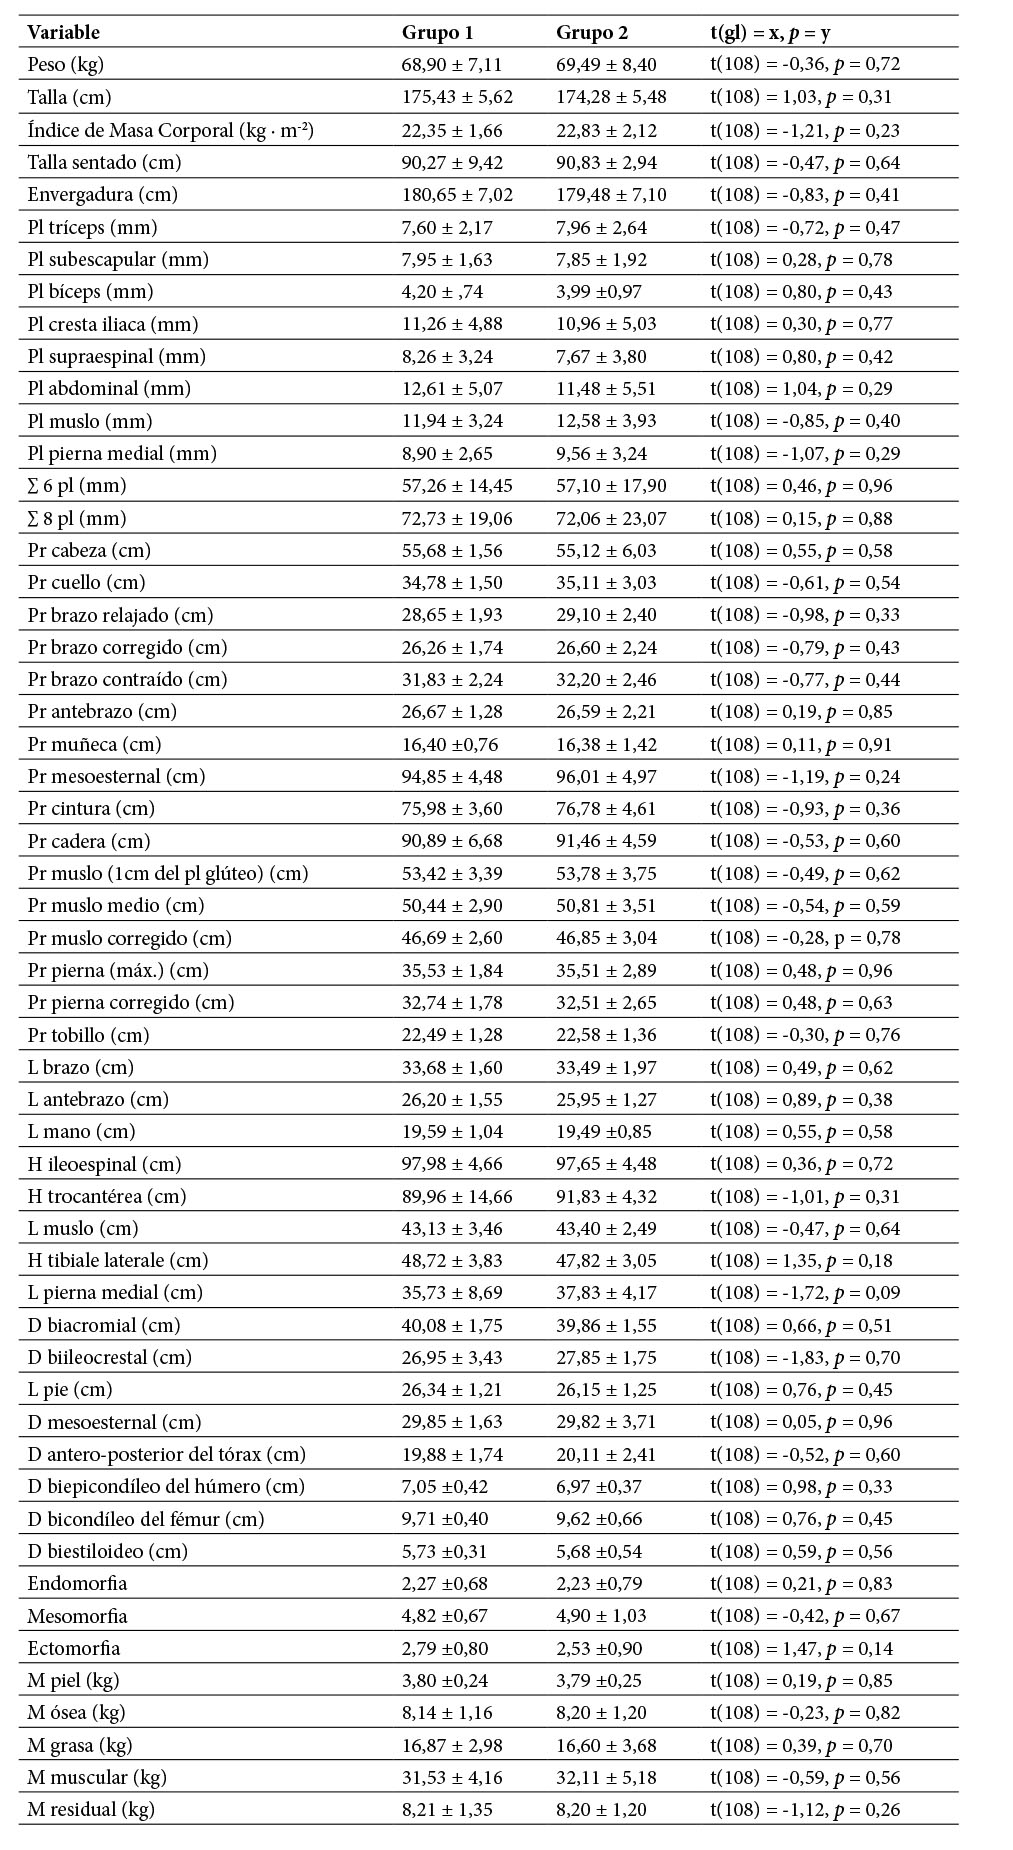 Características antropométricas, somatotipo e índice de masa corporal de los piragüistas